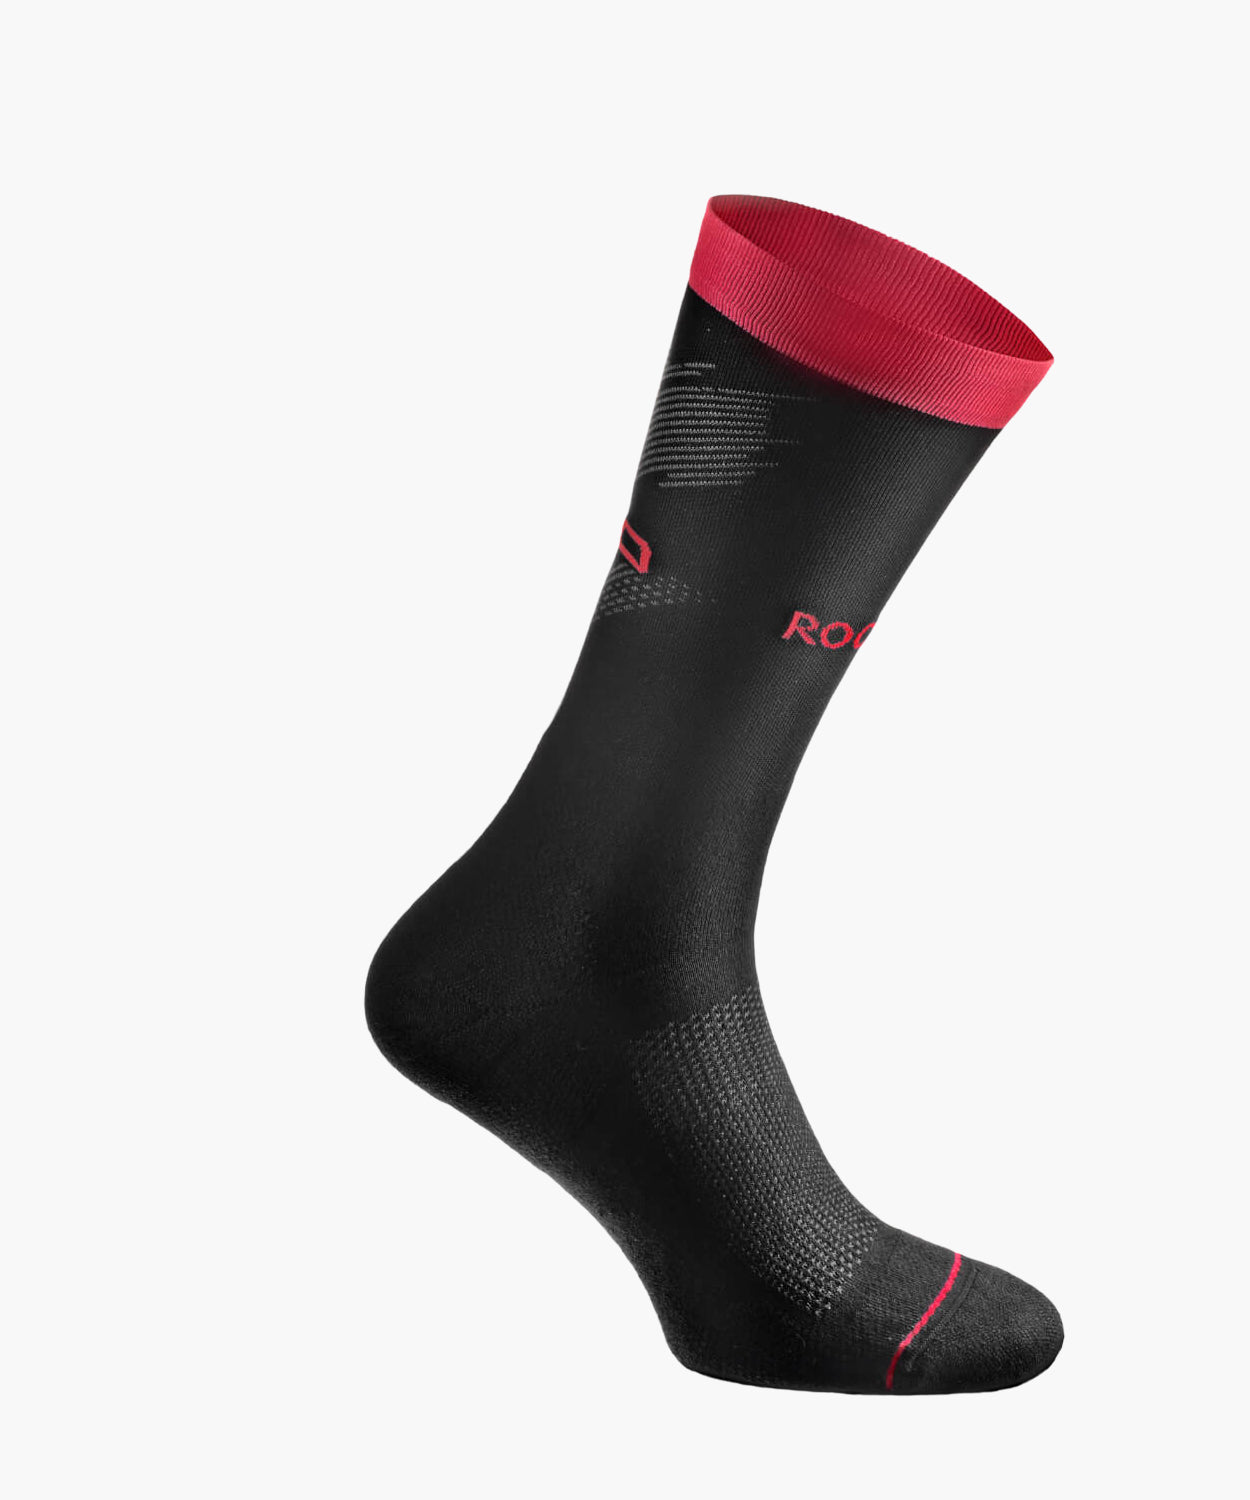 Evo Cycling Socks